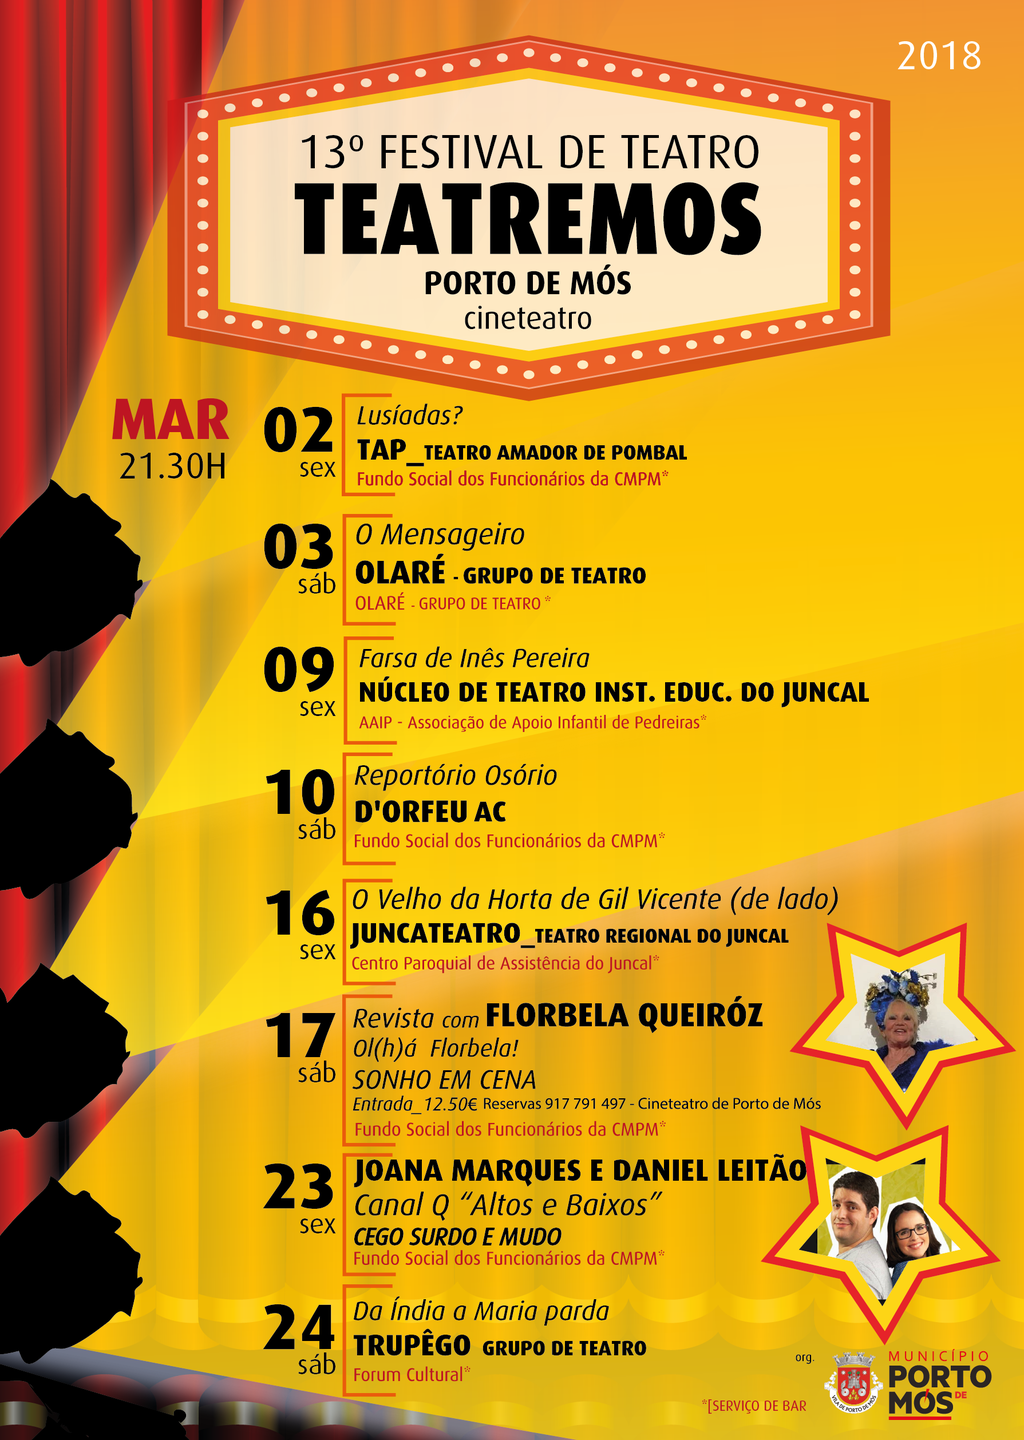 Teatremos - Festival de Teatro